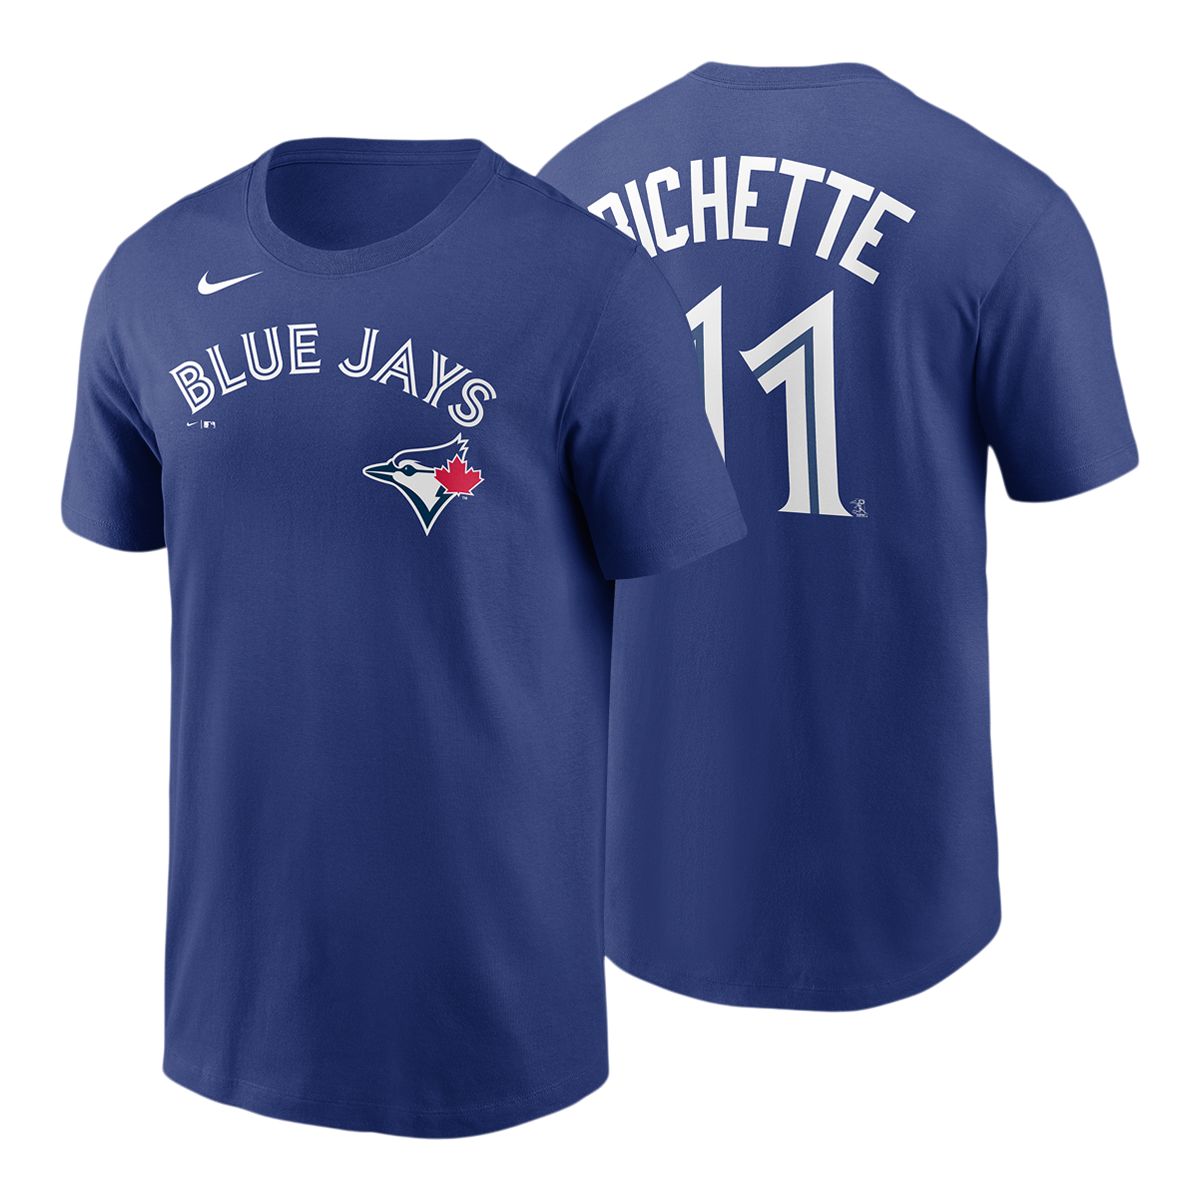 NIKE Toronto Blue Jays Nike Bo Bichette Away Jersey Youth Baseball MLB